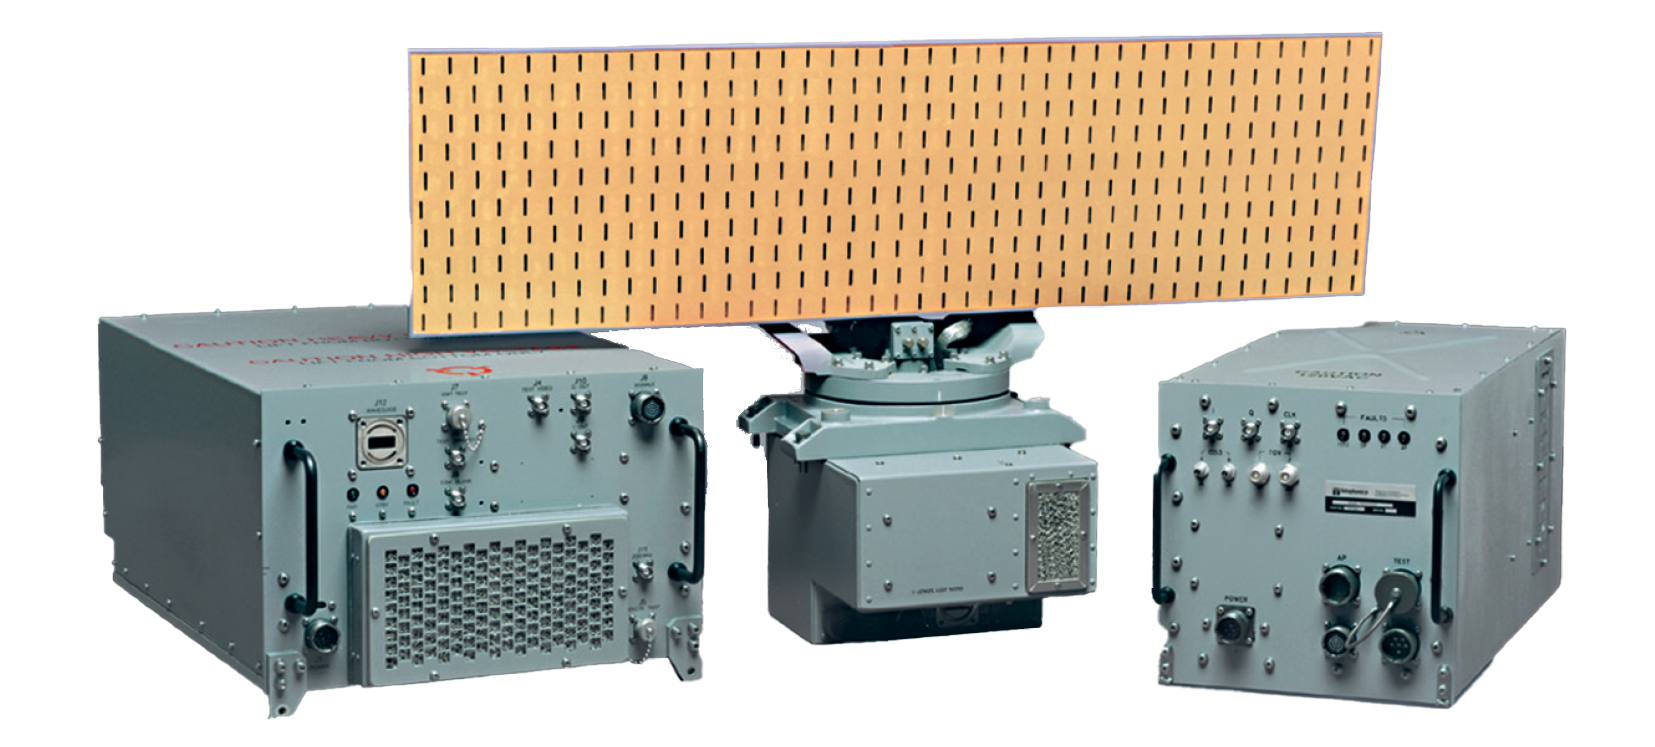 Photo of Telephonics OceanEye Radar